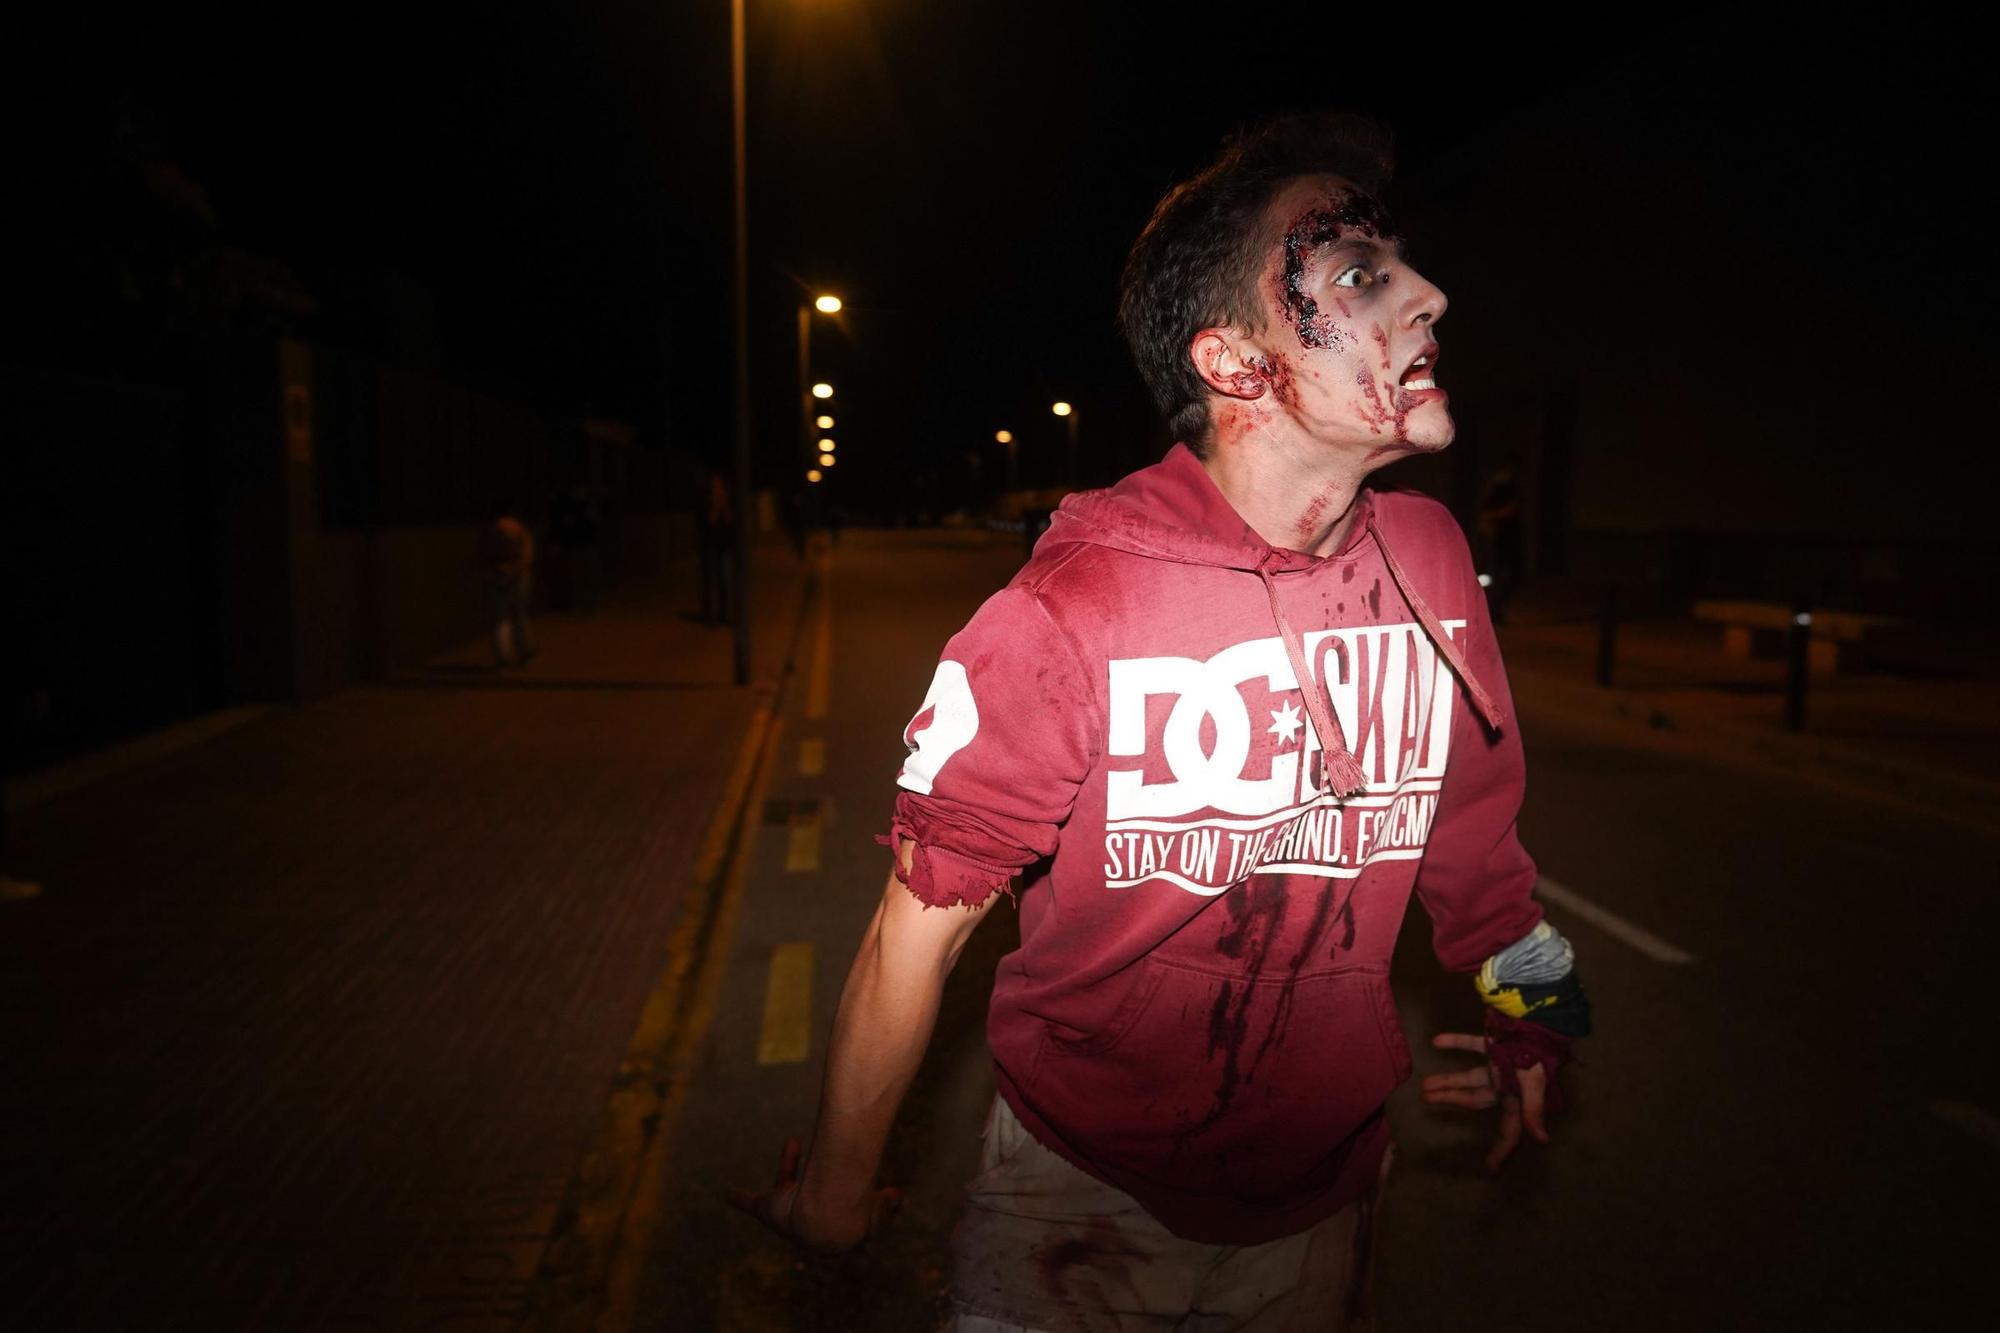 Un 'Walking dead' en Sant Jordi